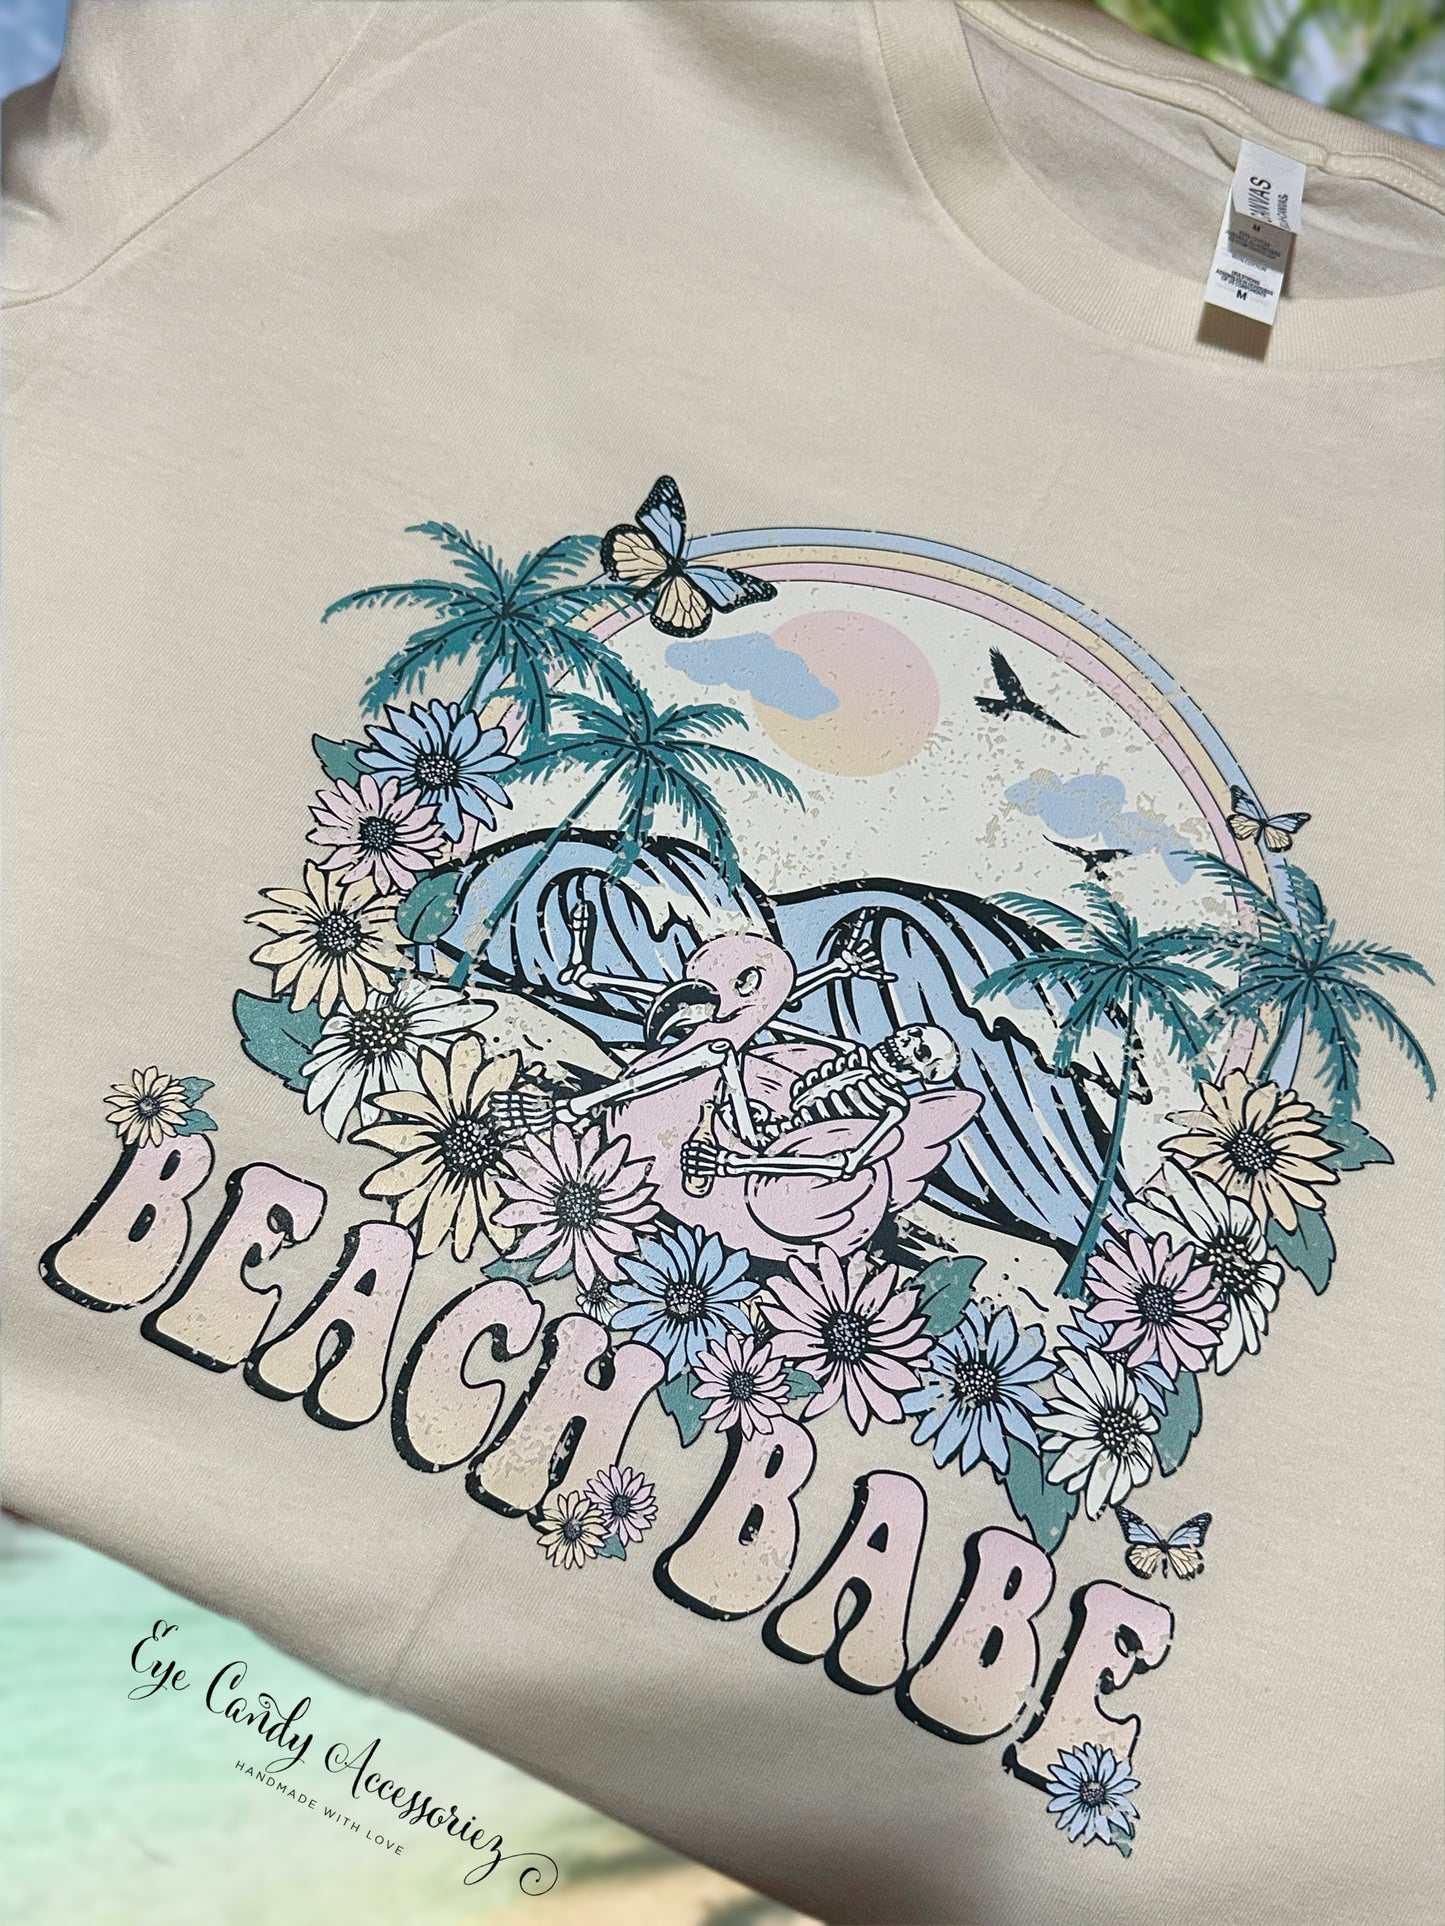 Vintage Beach Babe T-Shirt - Women’s